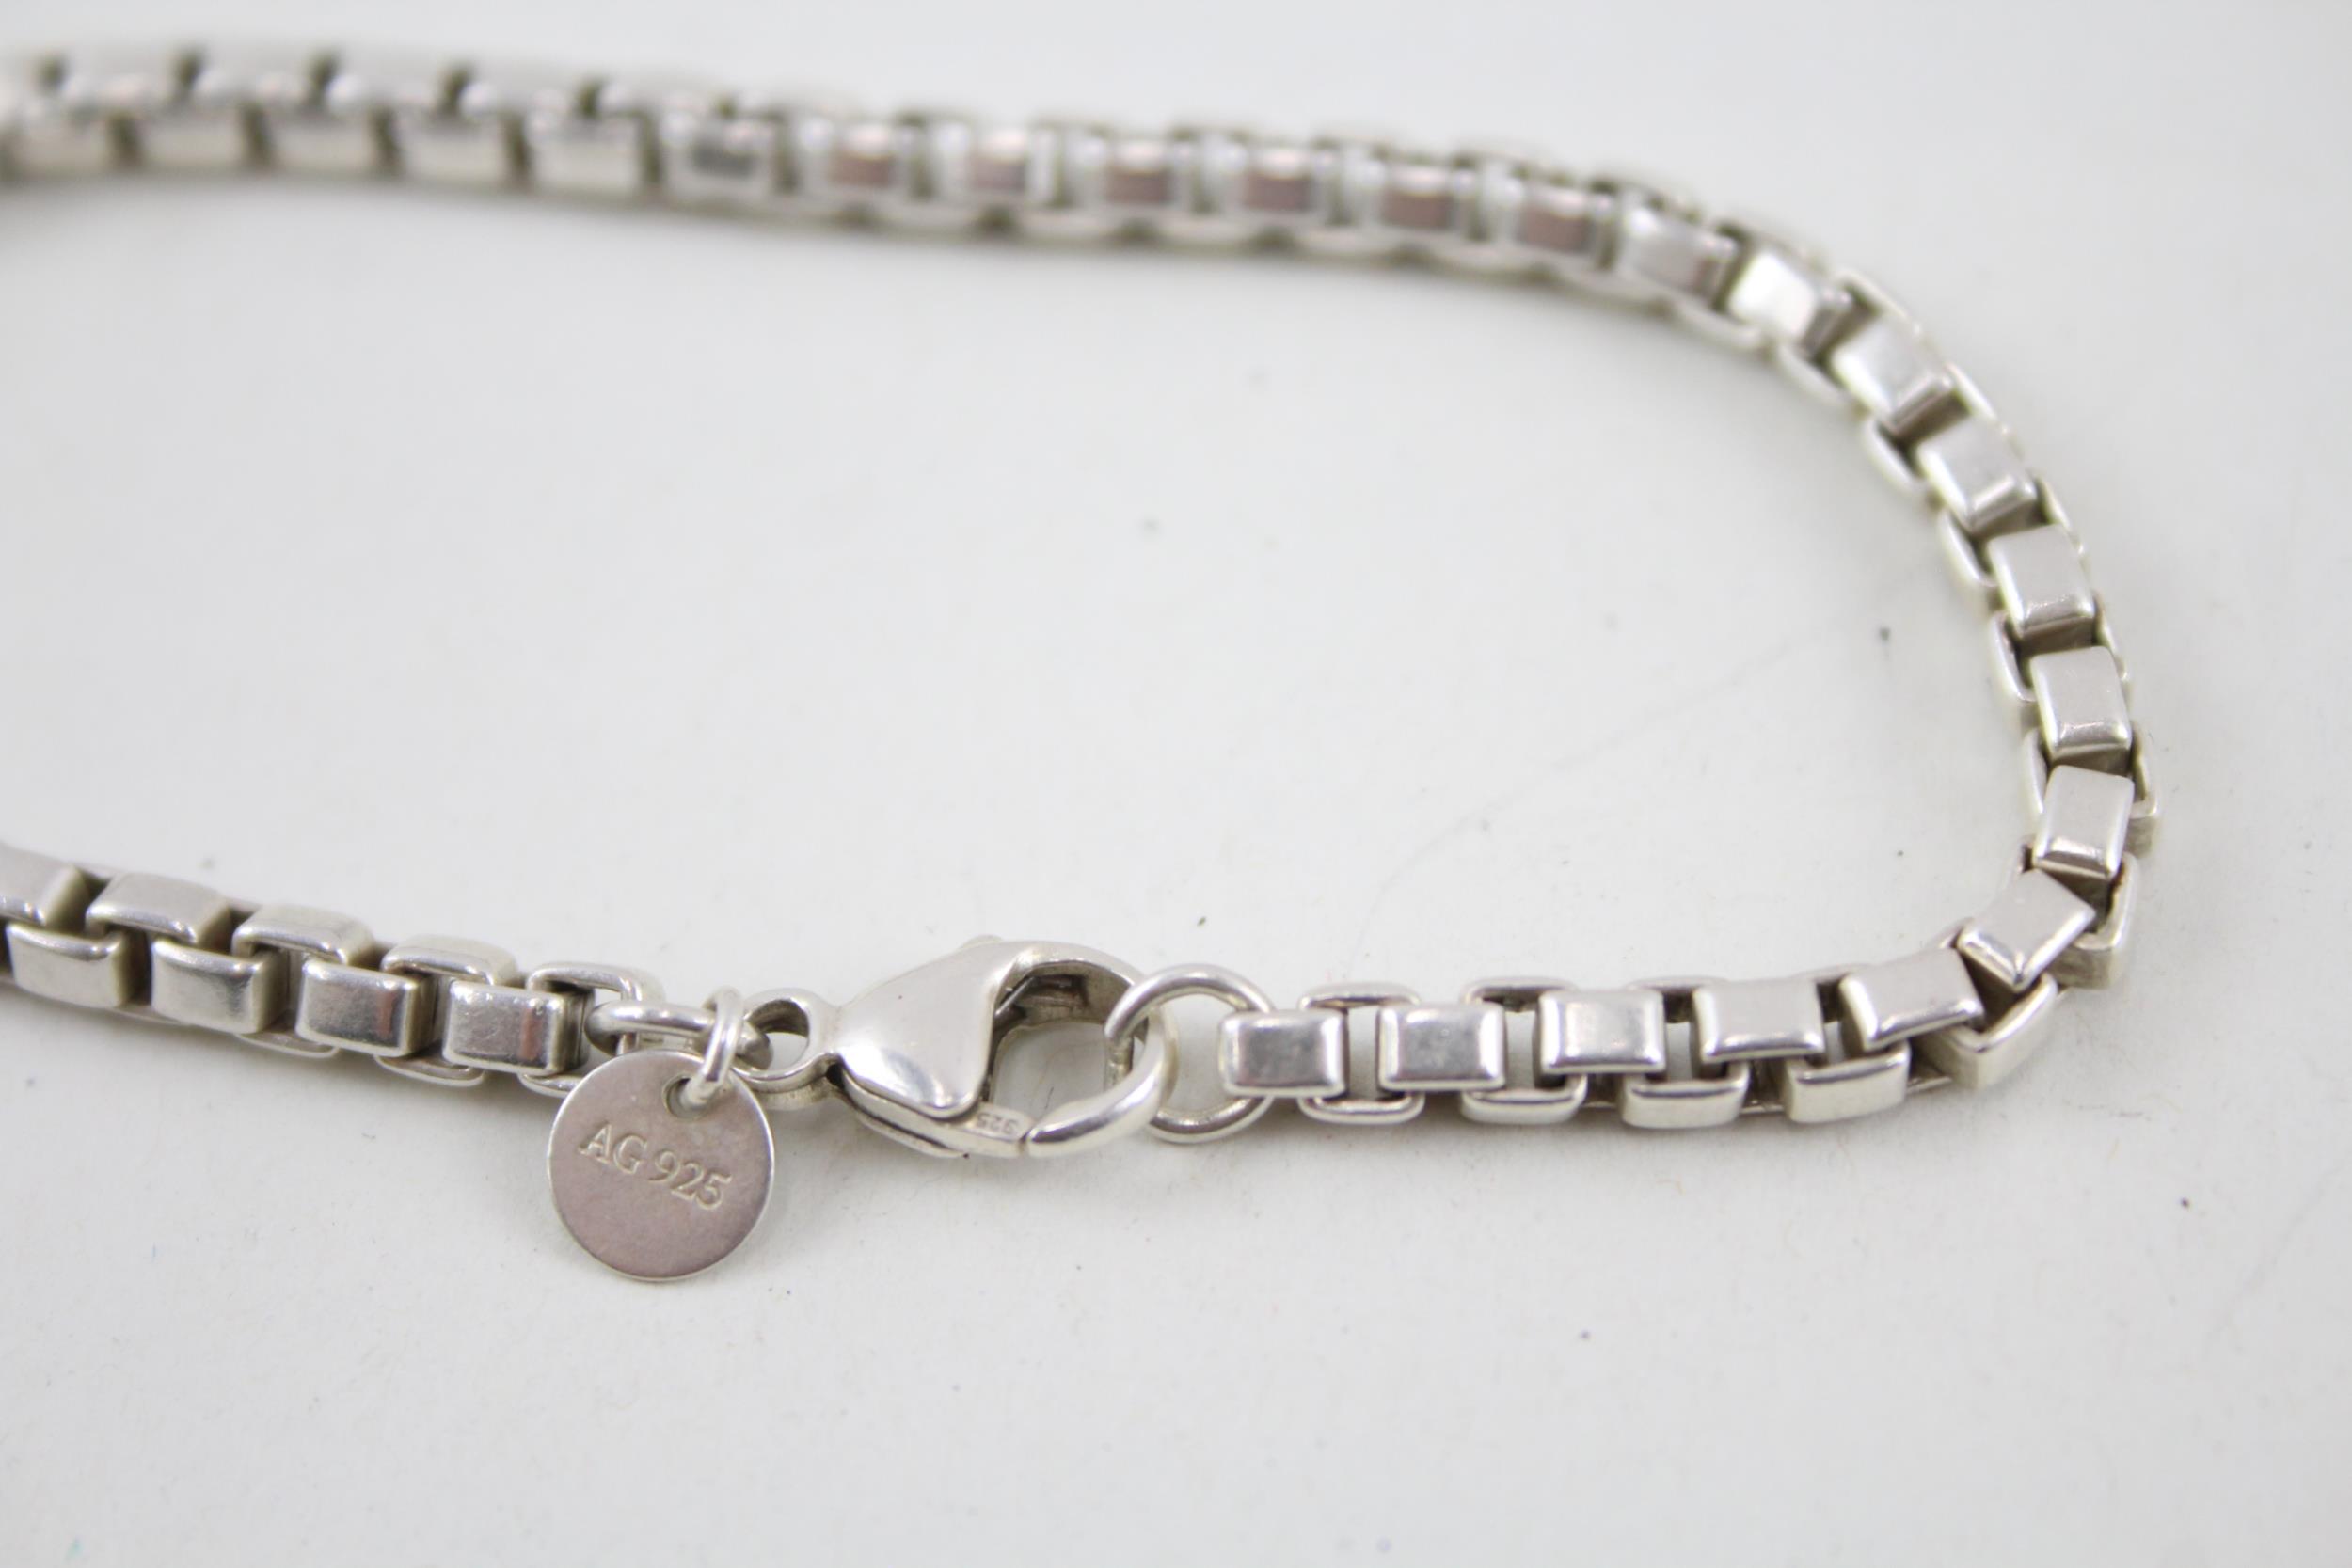 Silver box link bracelet by designer Tiffany & Co (15g) - Image 3 of 5